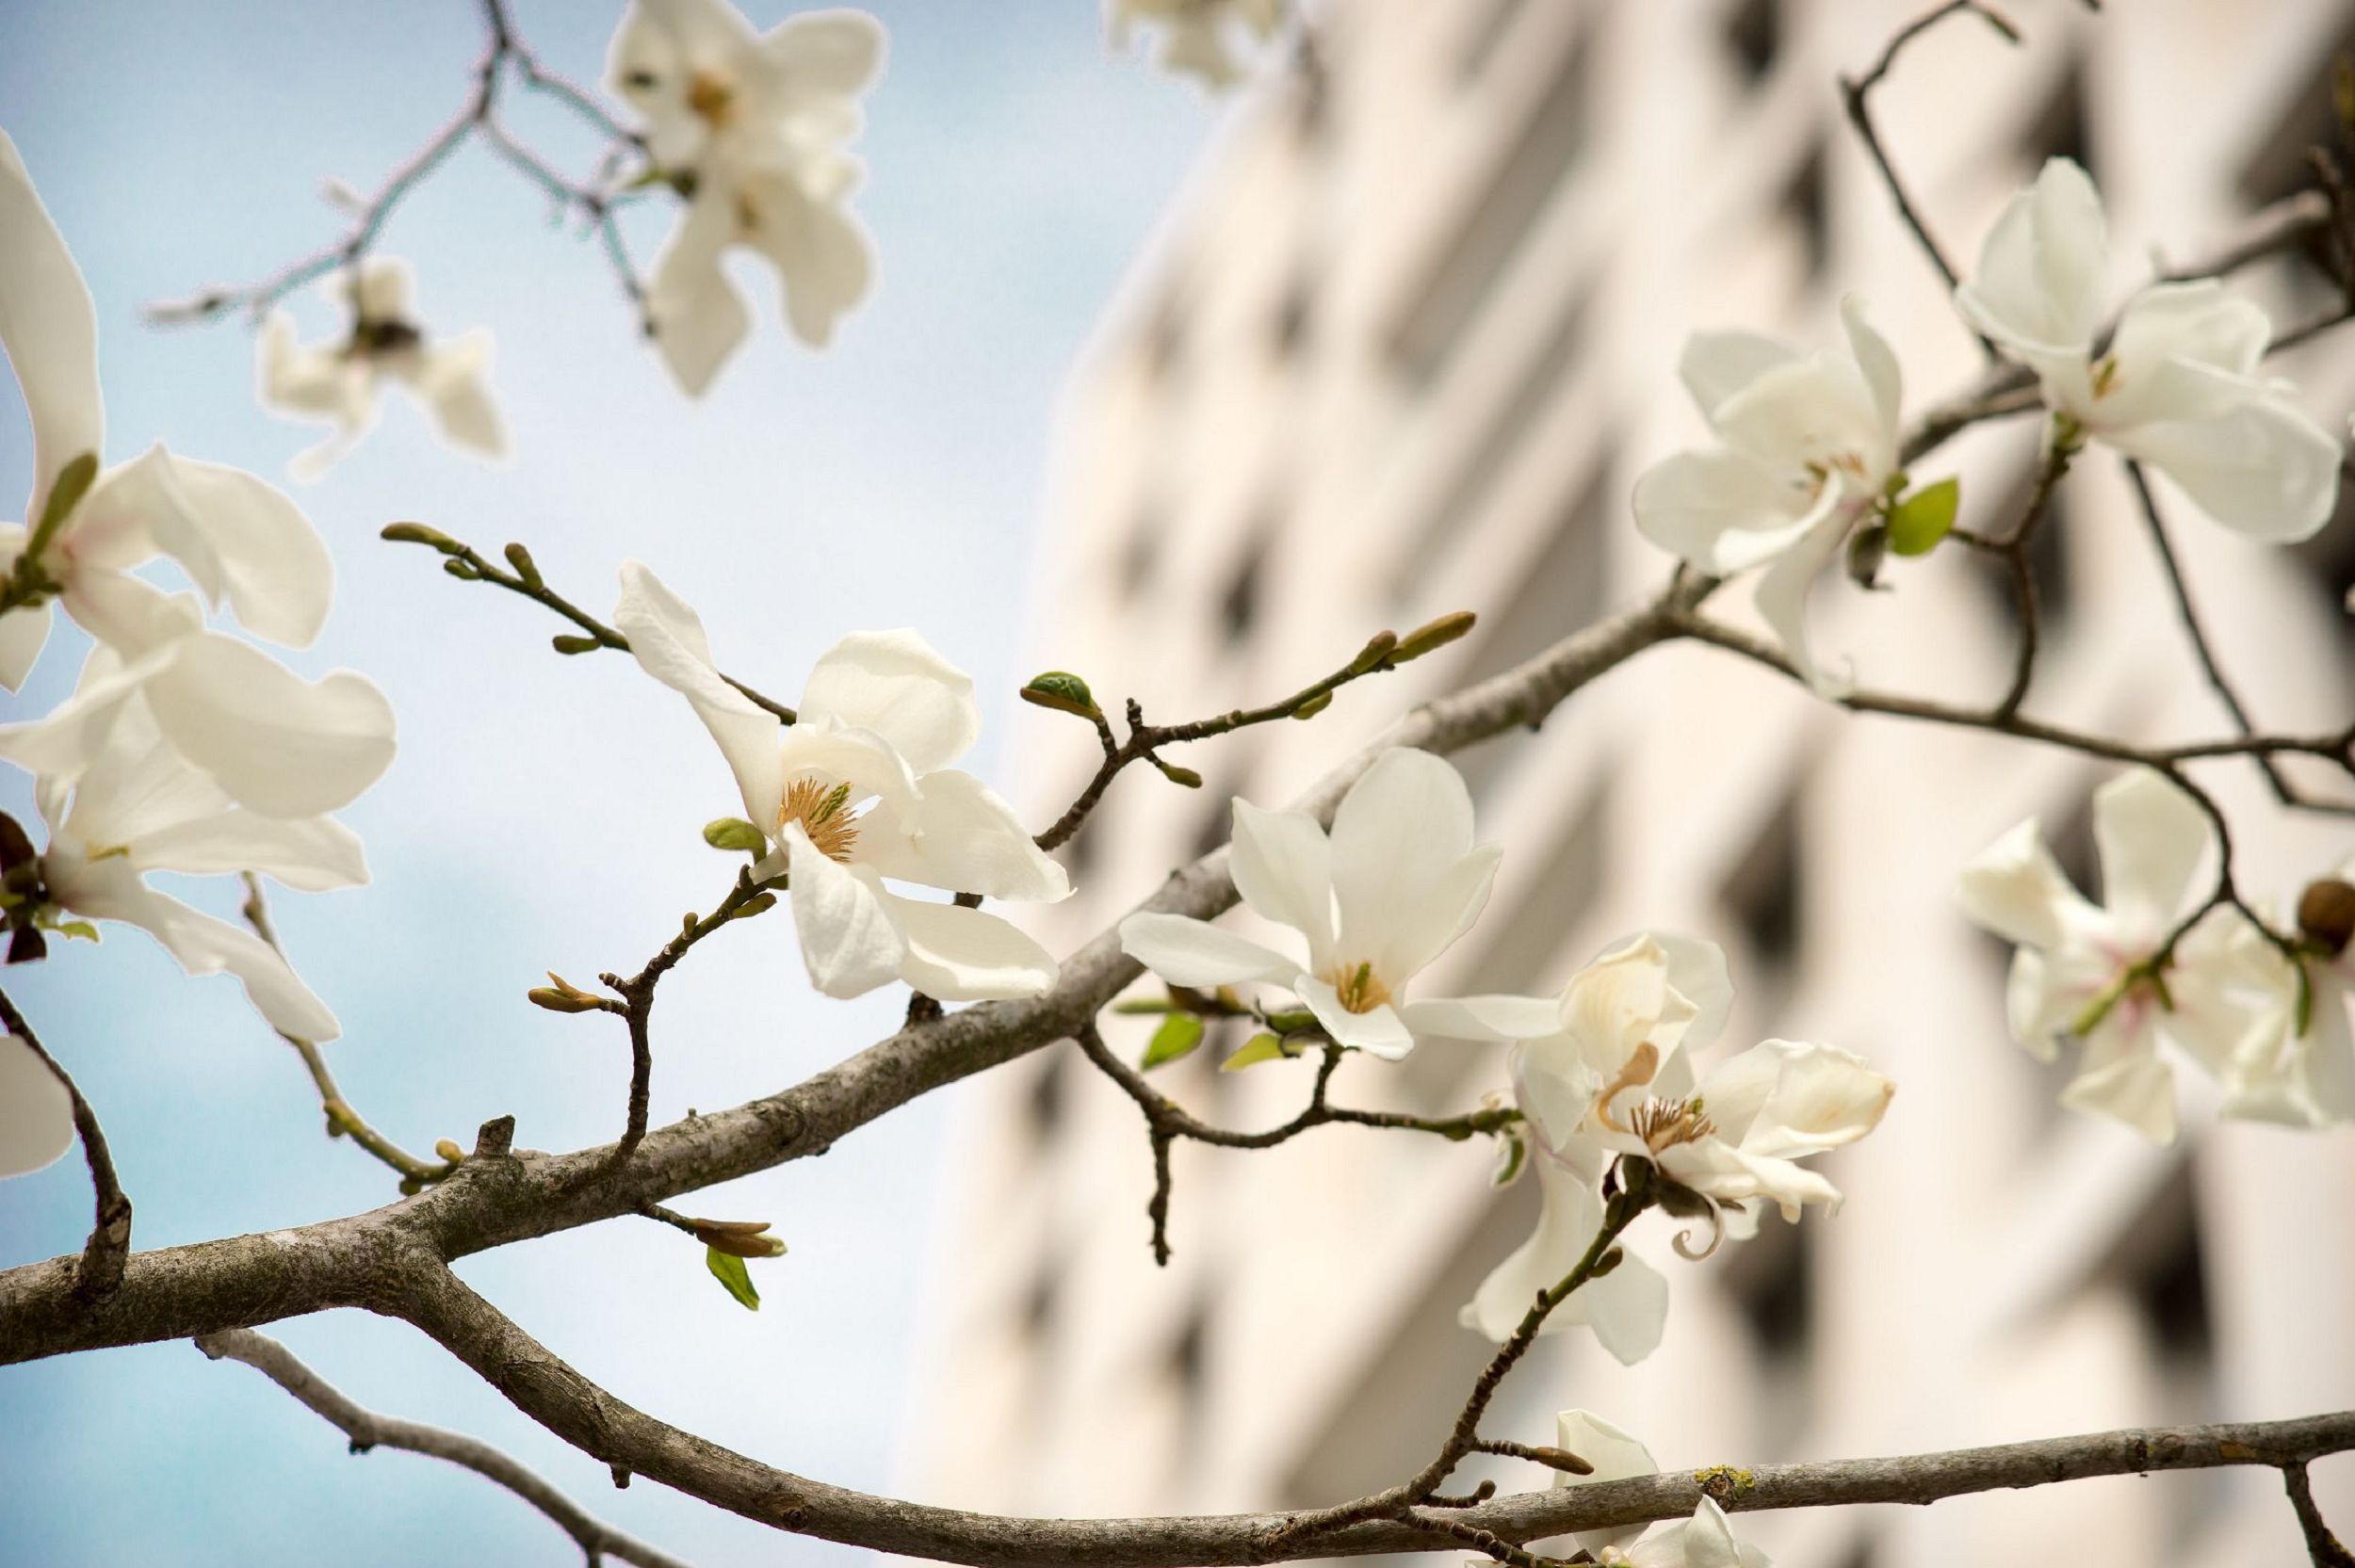 Bild: Magnolienblüte in der Gasse, Foto: ver.de landschaftsarchitektur